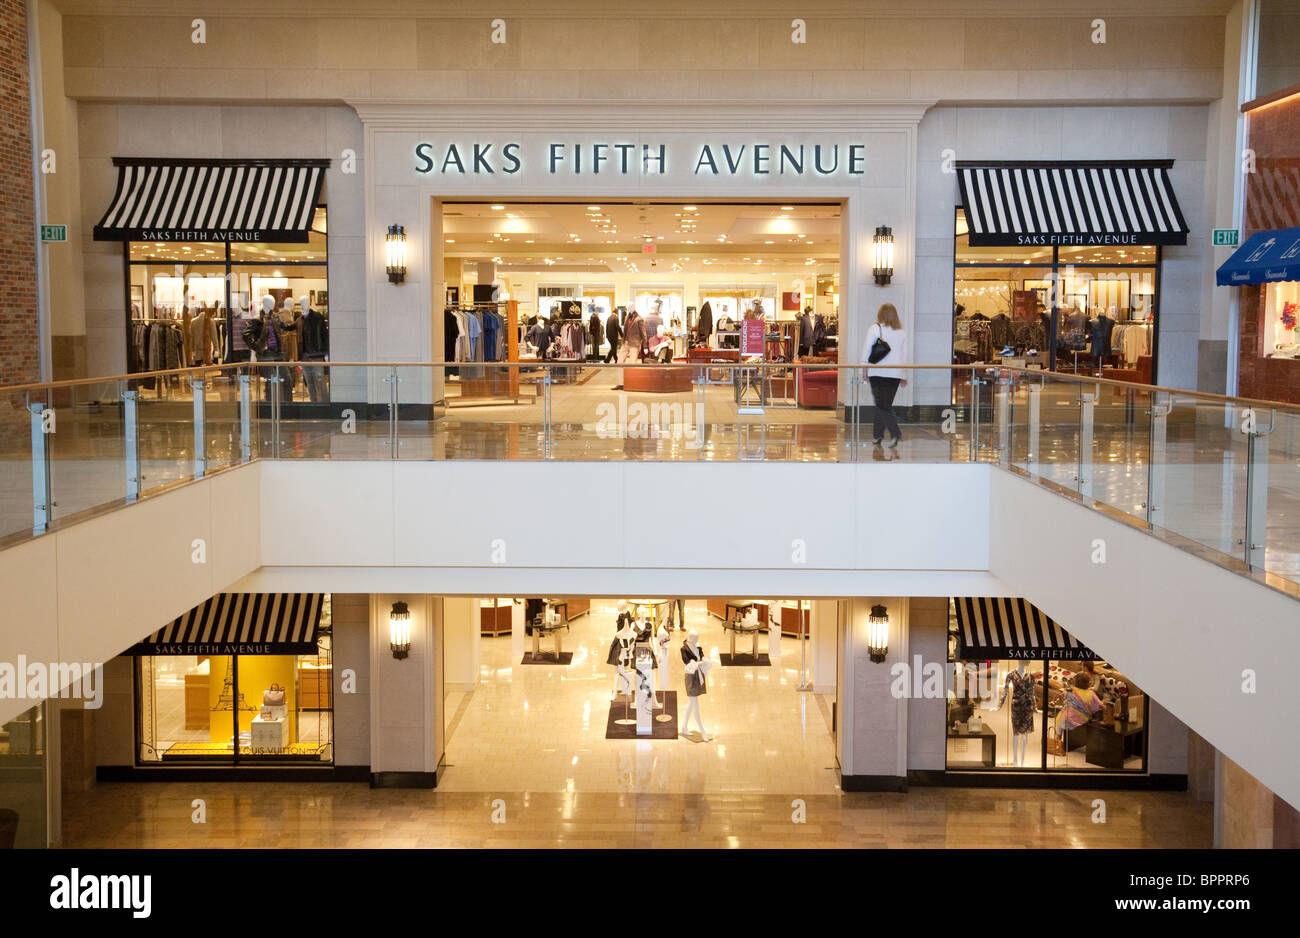 Saks Fifth Avenue Store, The Fashion Show Mall, Las Vegas, Nevada, USA  Stockfotografie - Alamy